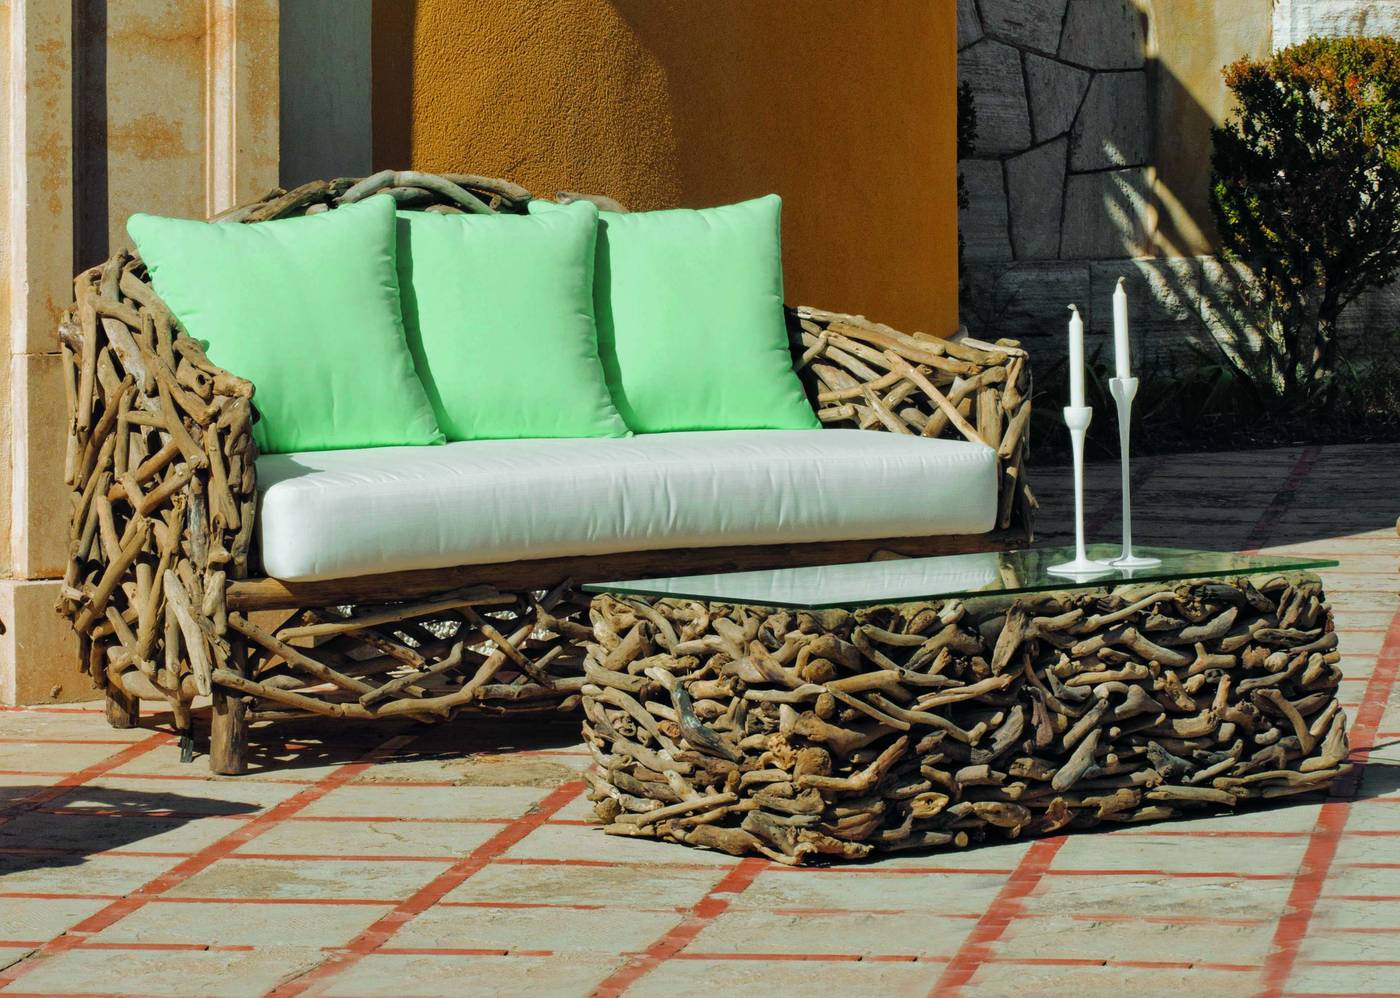 Conjunto Madera tropical Aberdin - Conjunto de madera tropical: Sofá 3 plazas + 2 sillones + mesa de centro + cojines